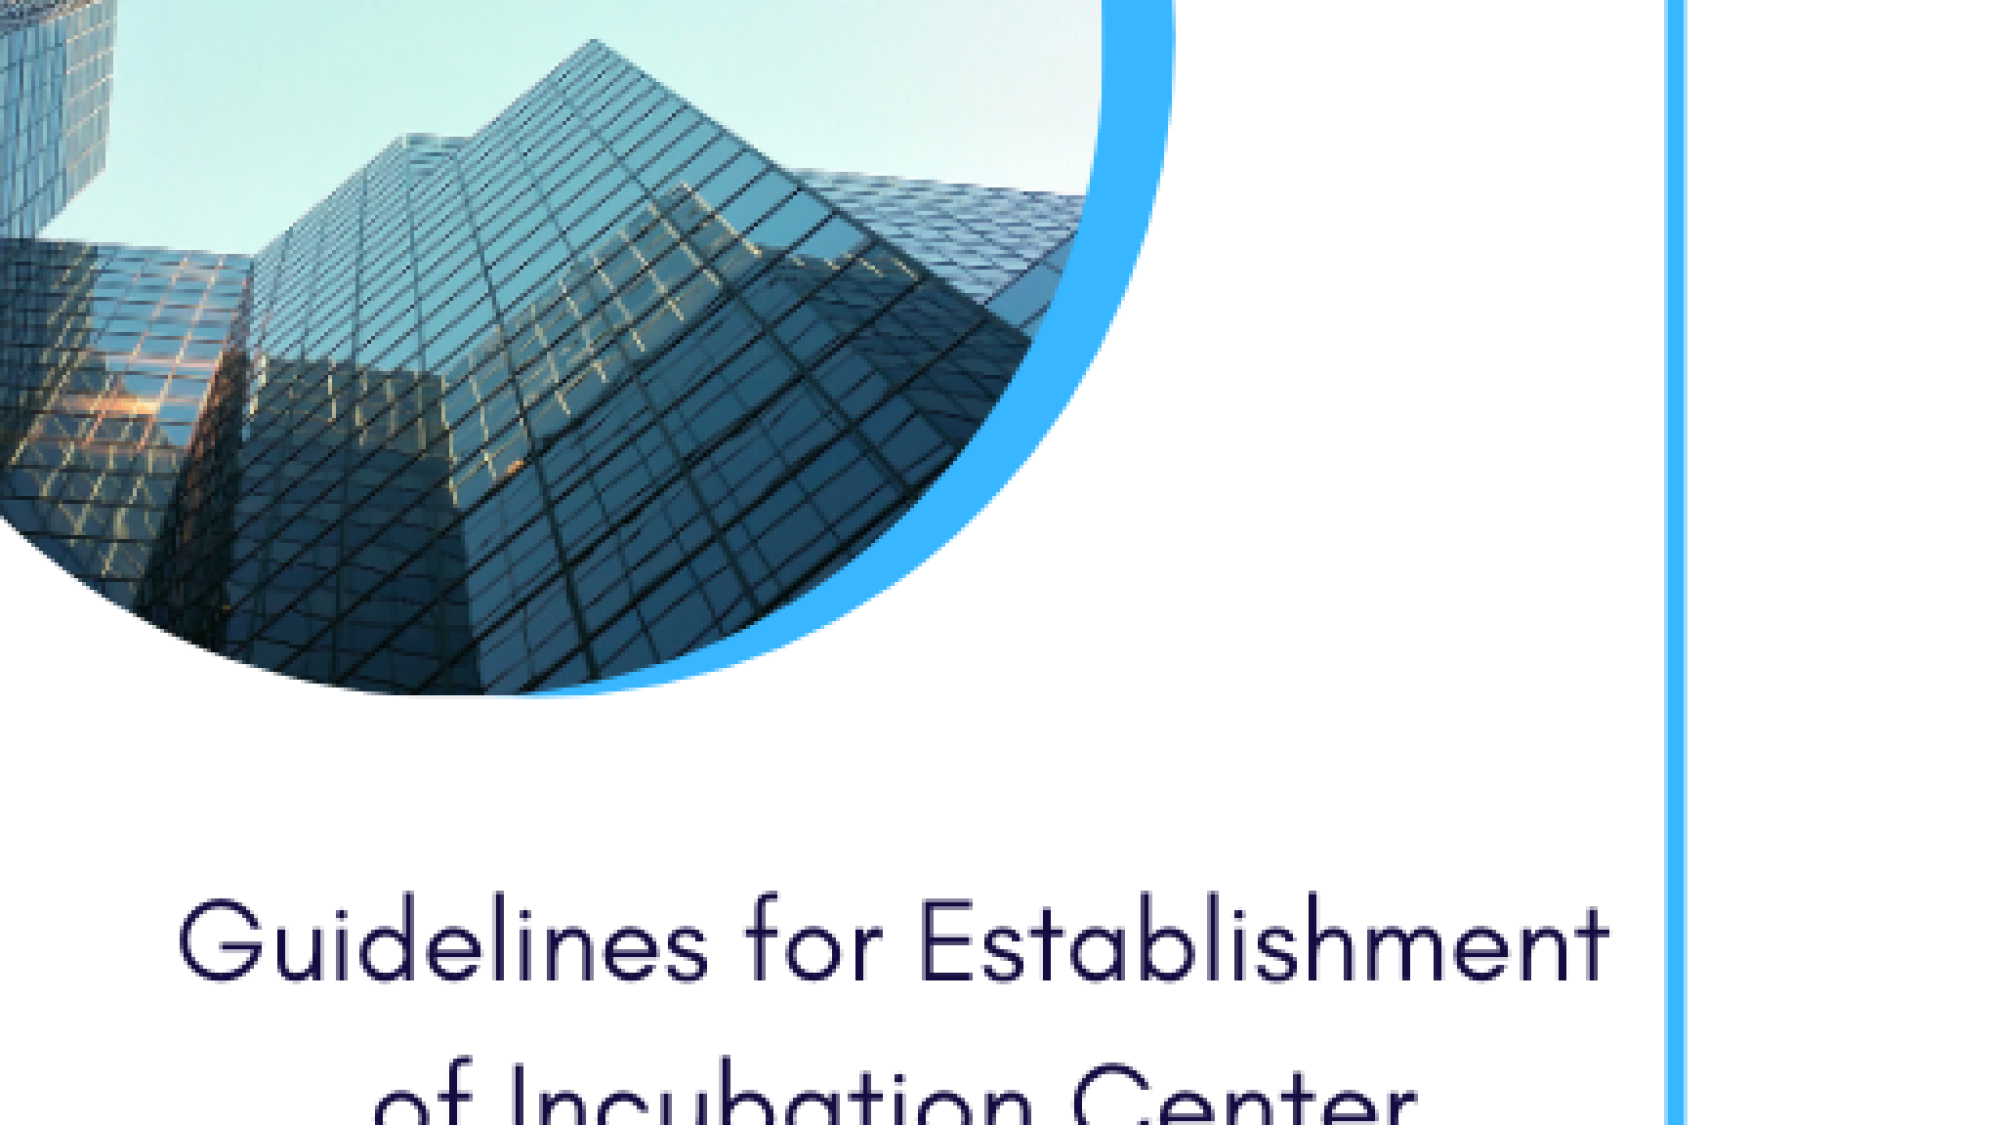 guidelines for Establishment of Incubation Center scheme for Establishment of Incubation Center scheme for Establishment of Incubation Center Pmfme scheme for incubation center